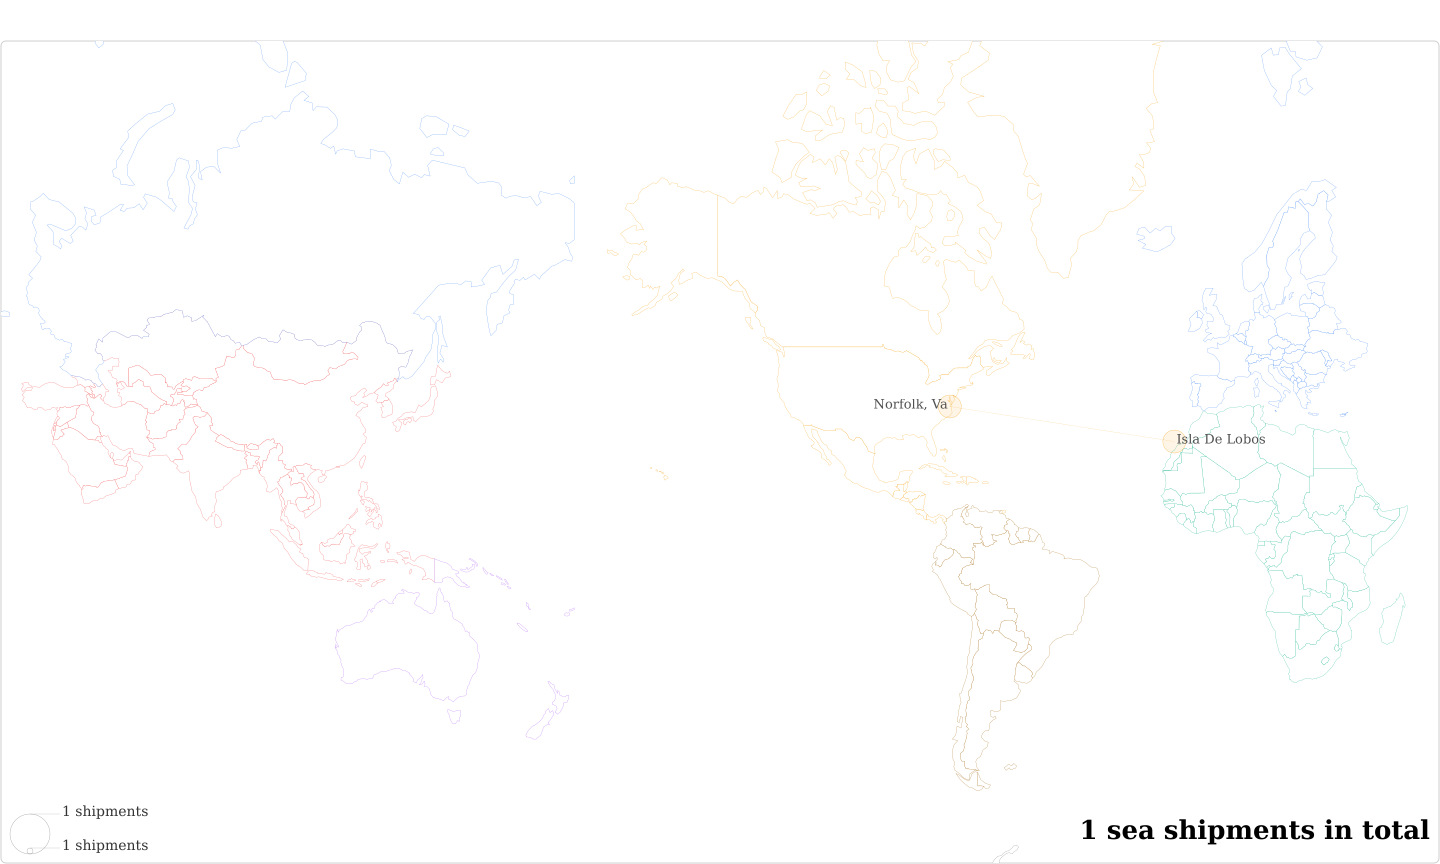 Crane Worldwide Logictics Canada's Imports Per Country Map